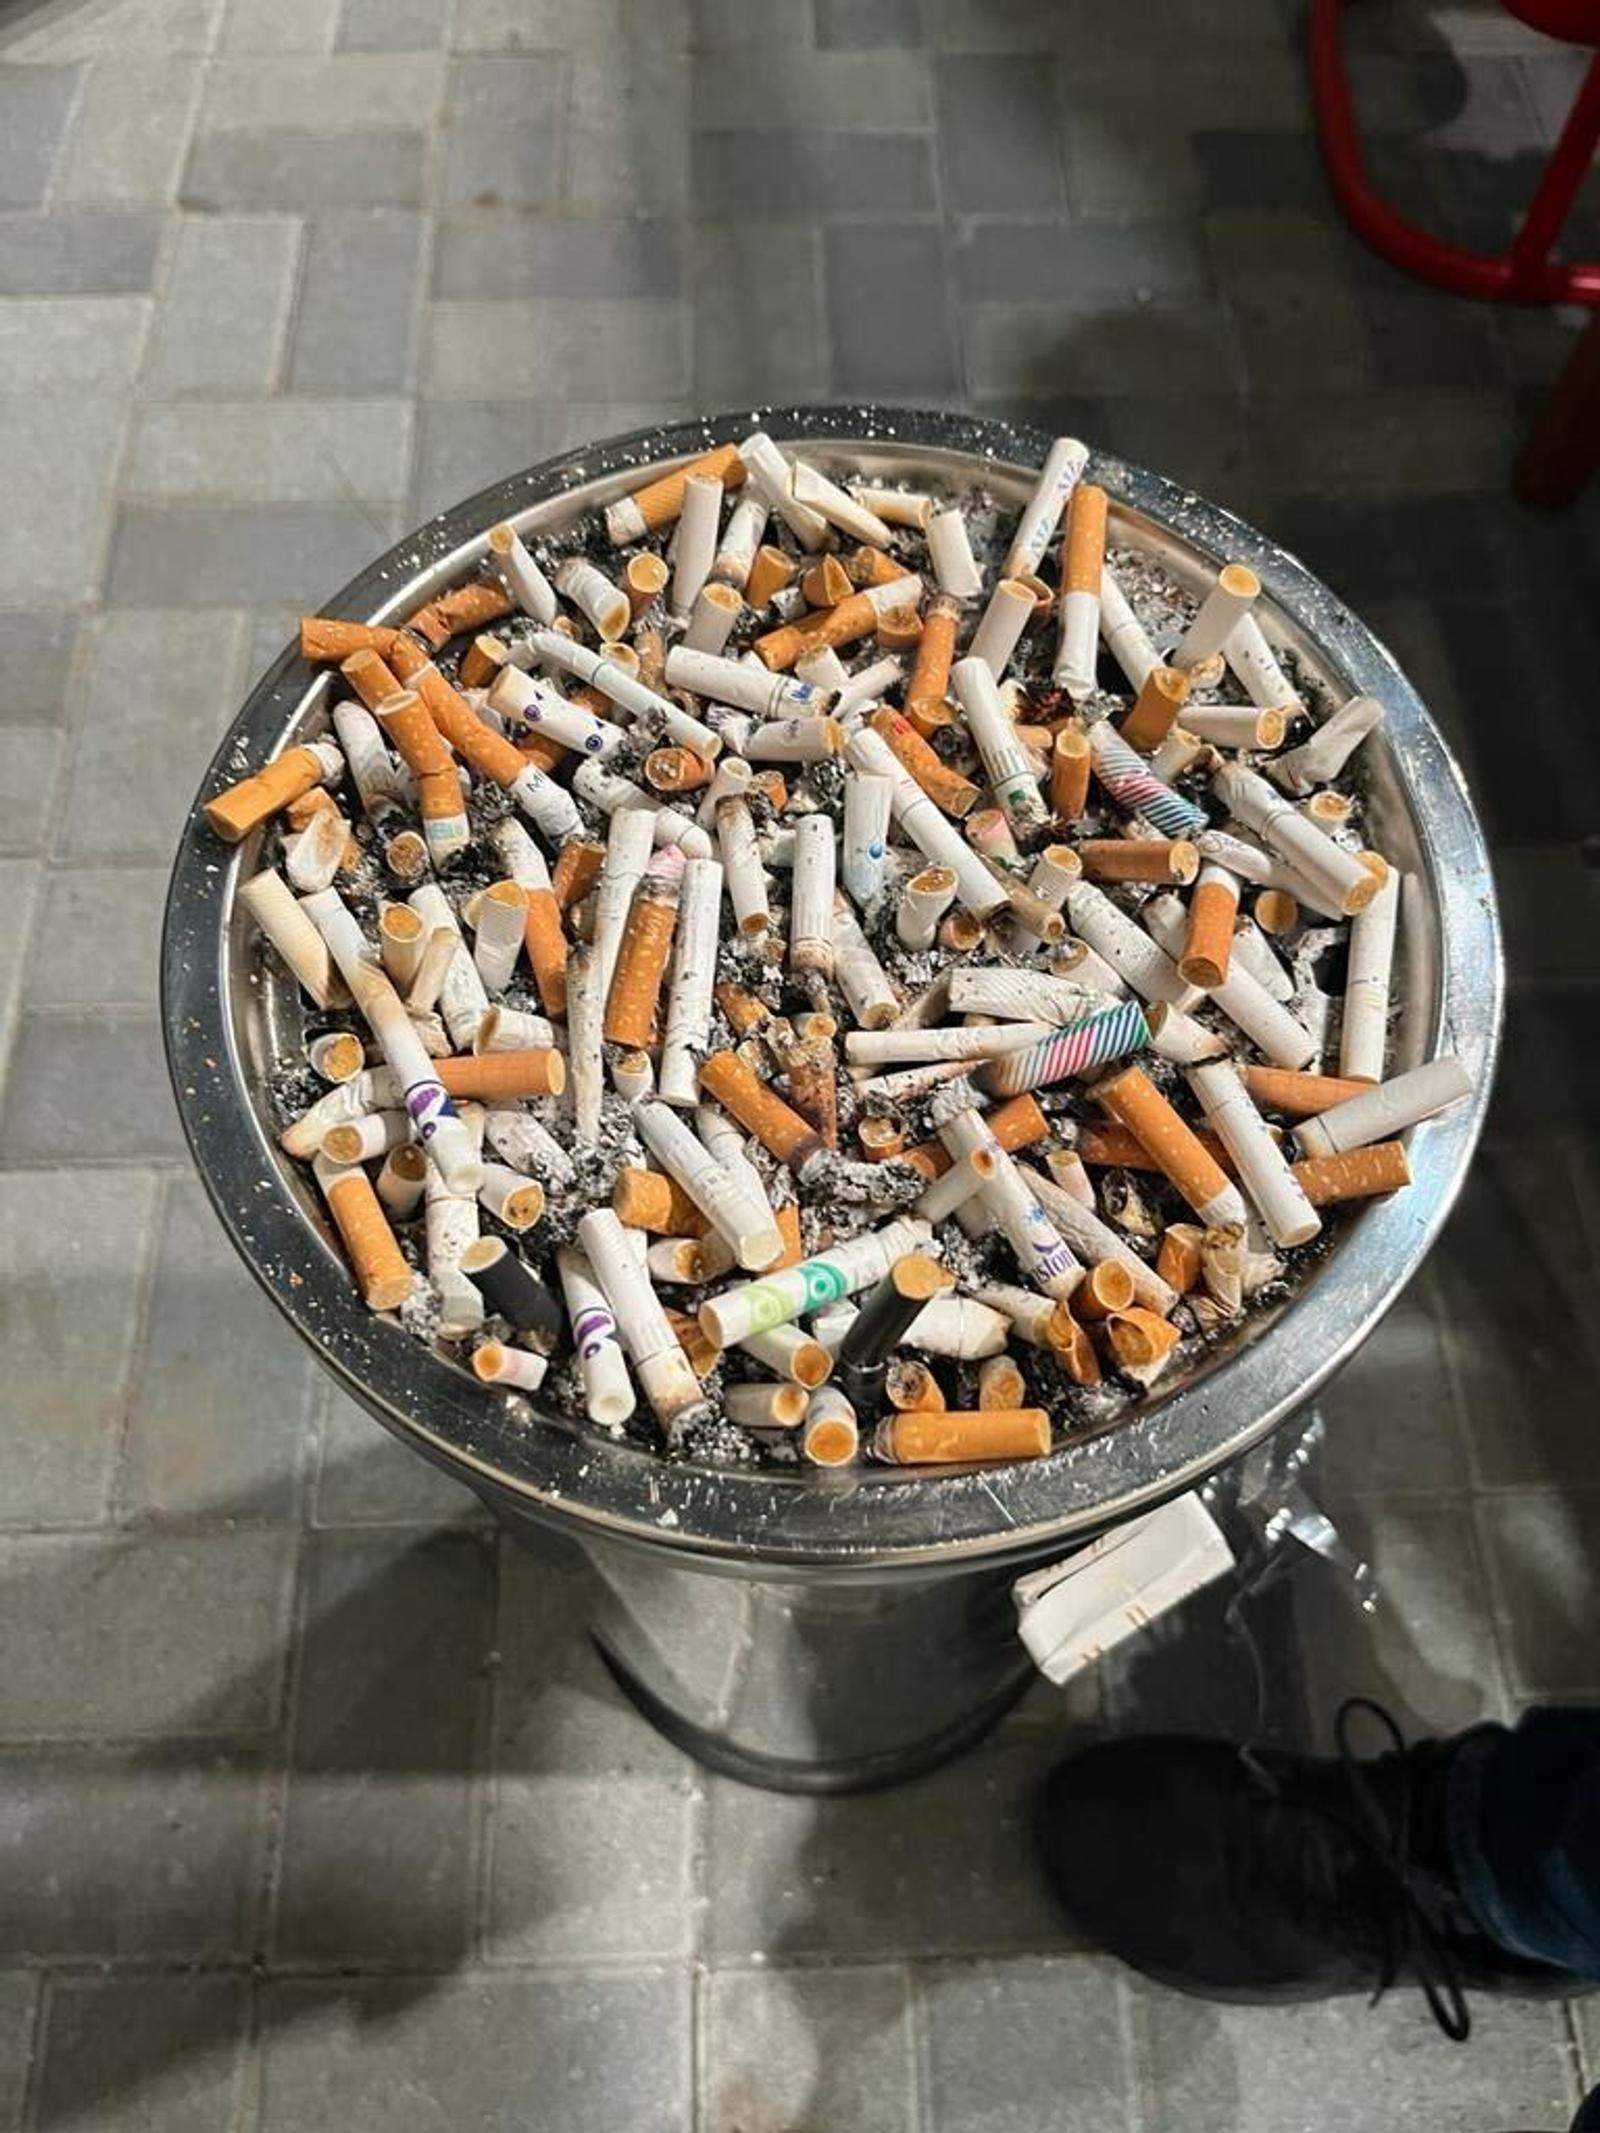 An ashtray full of cigarettes.